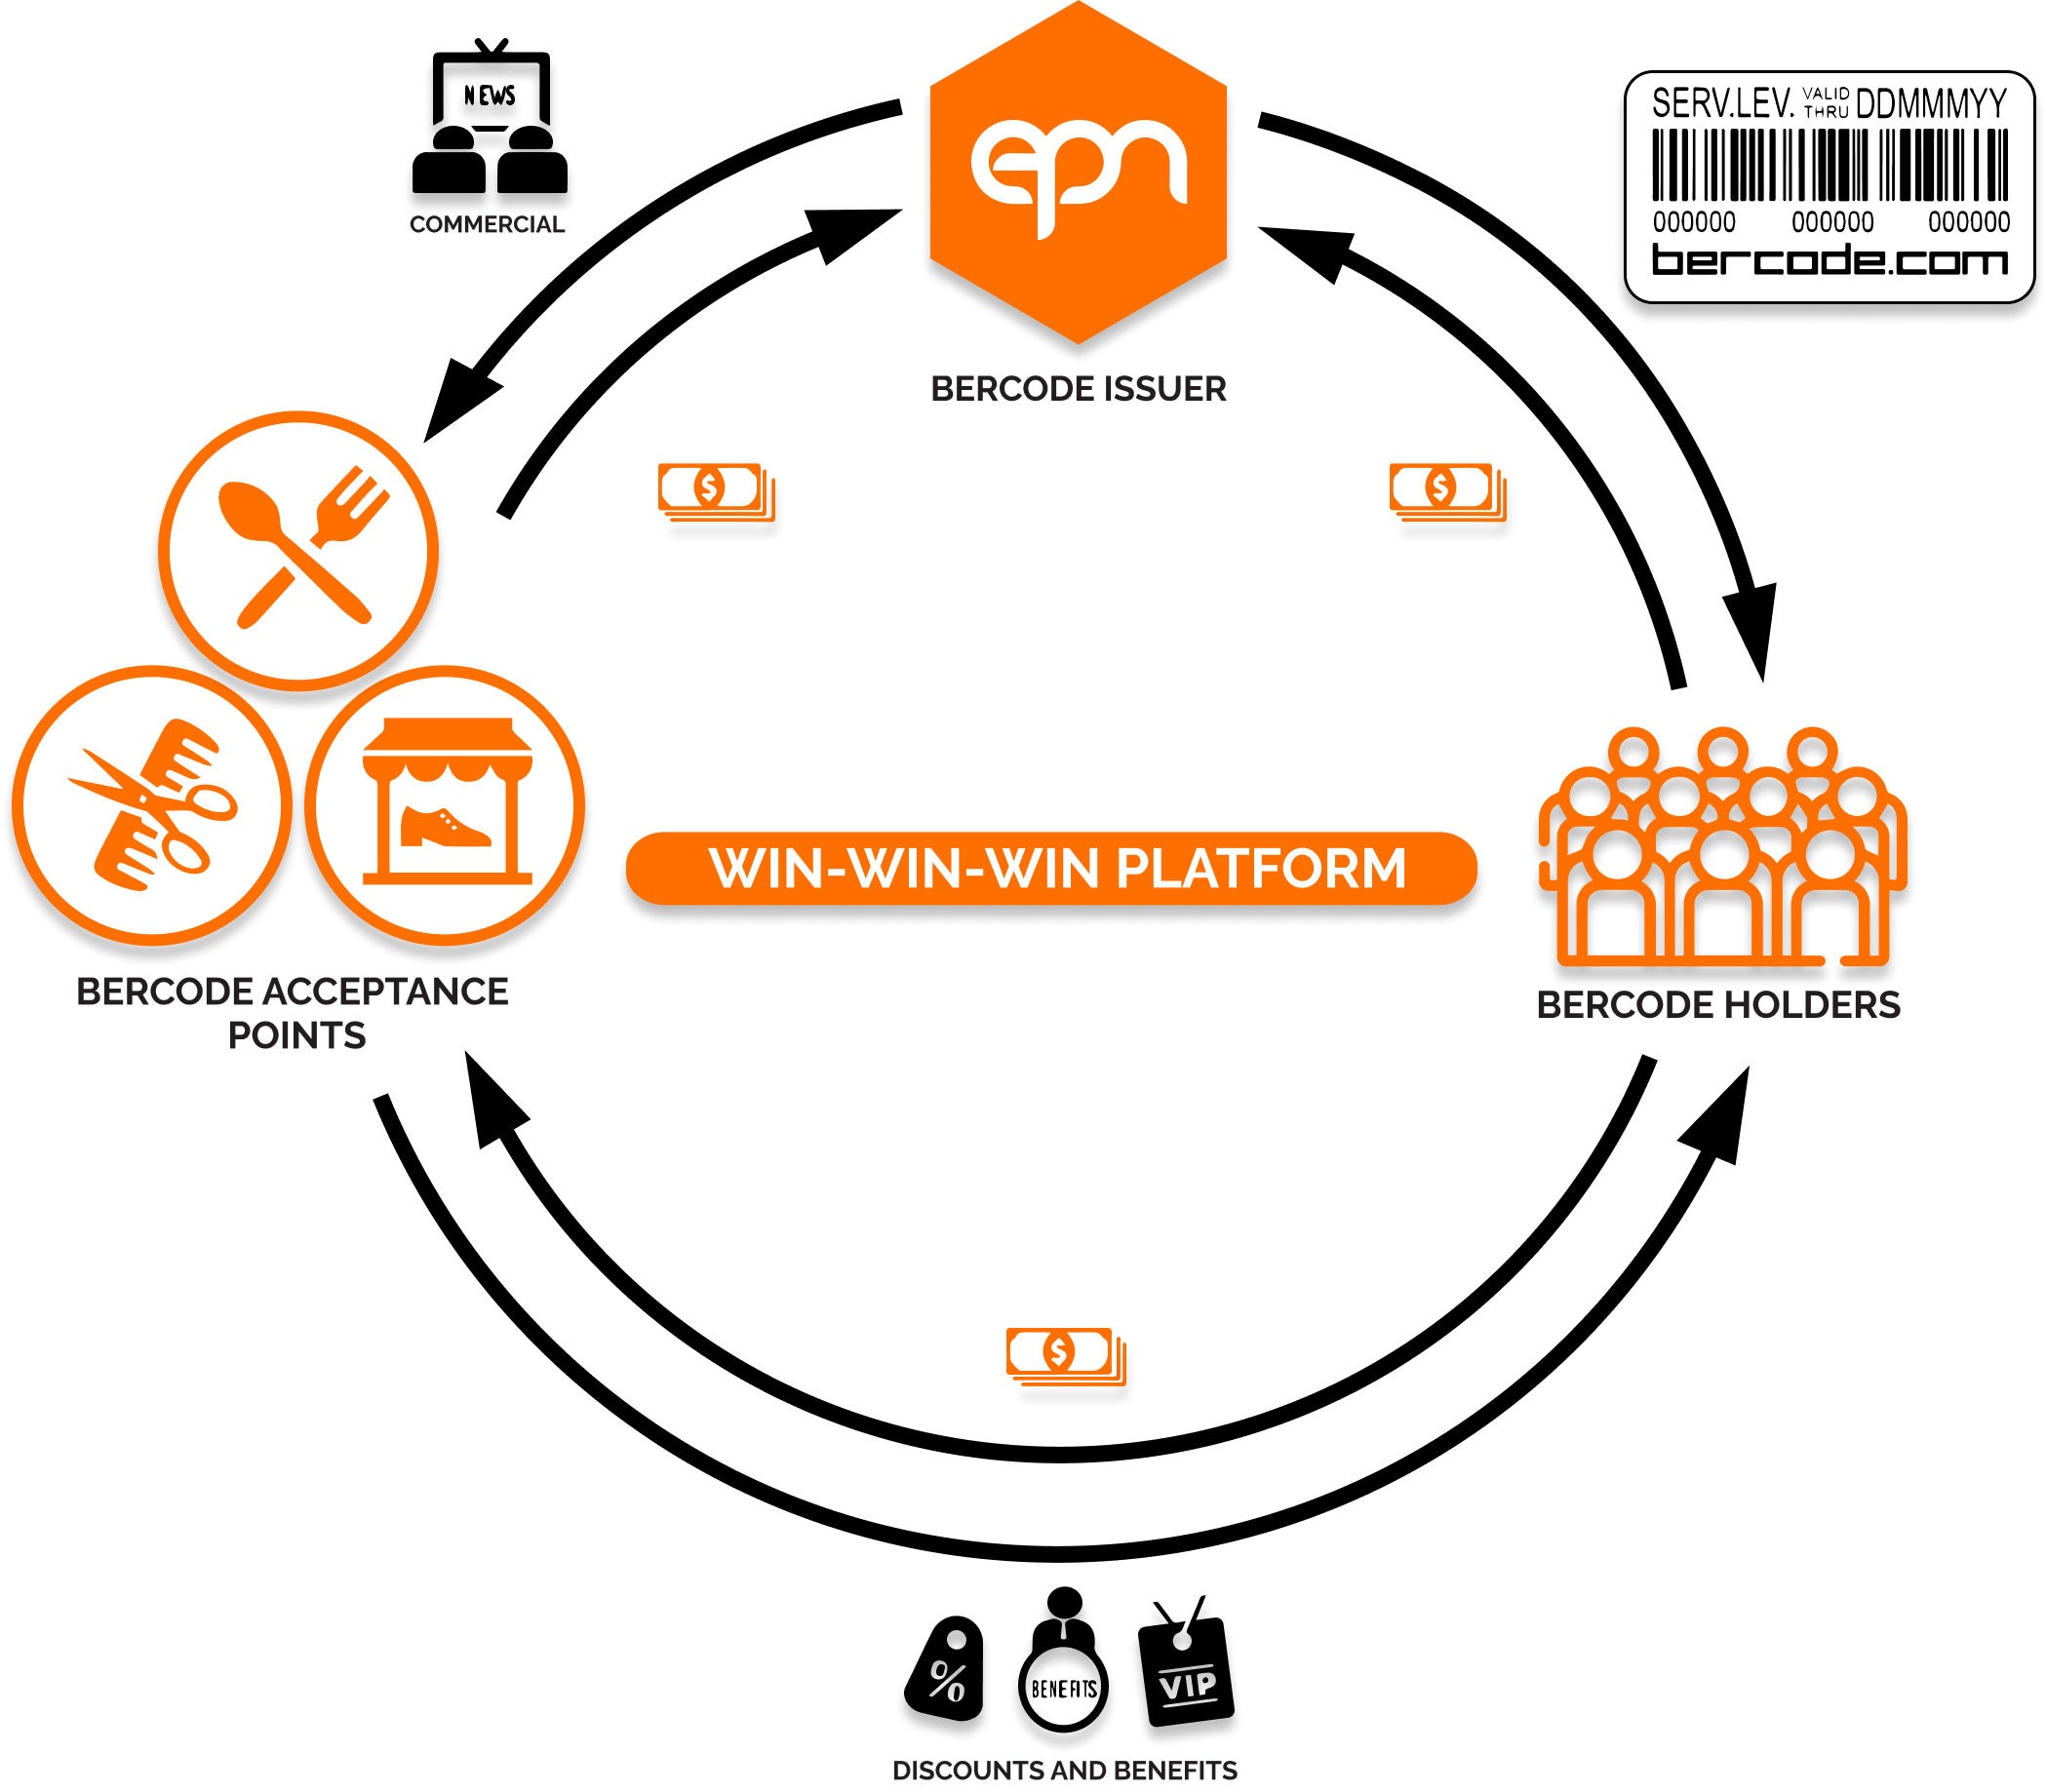 Win-Win-Win Platform